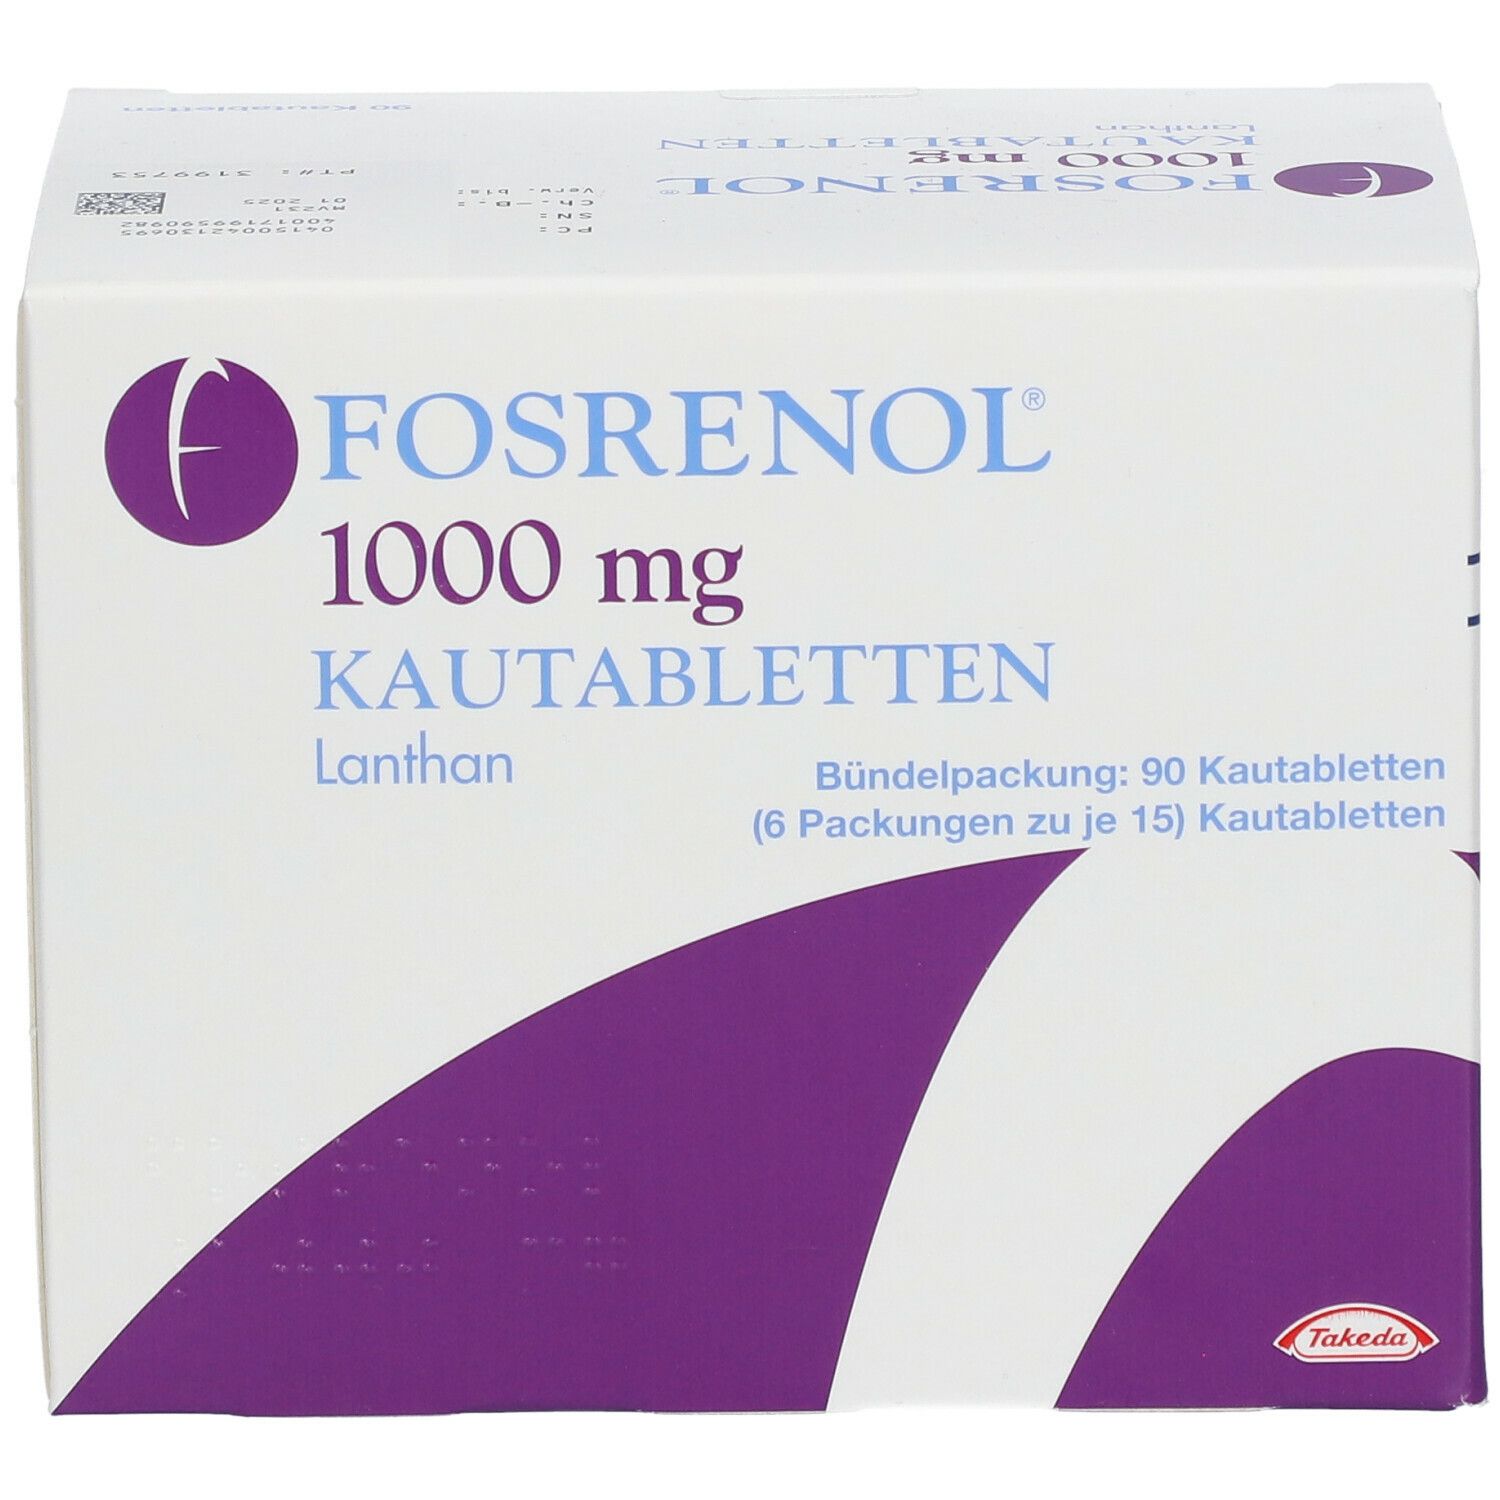 Fosrenol® 1000 mg